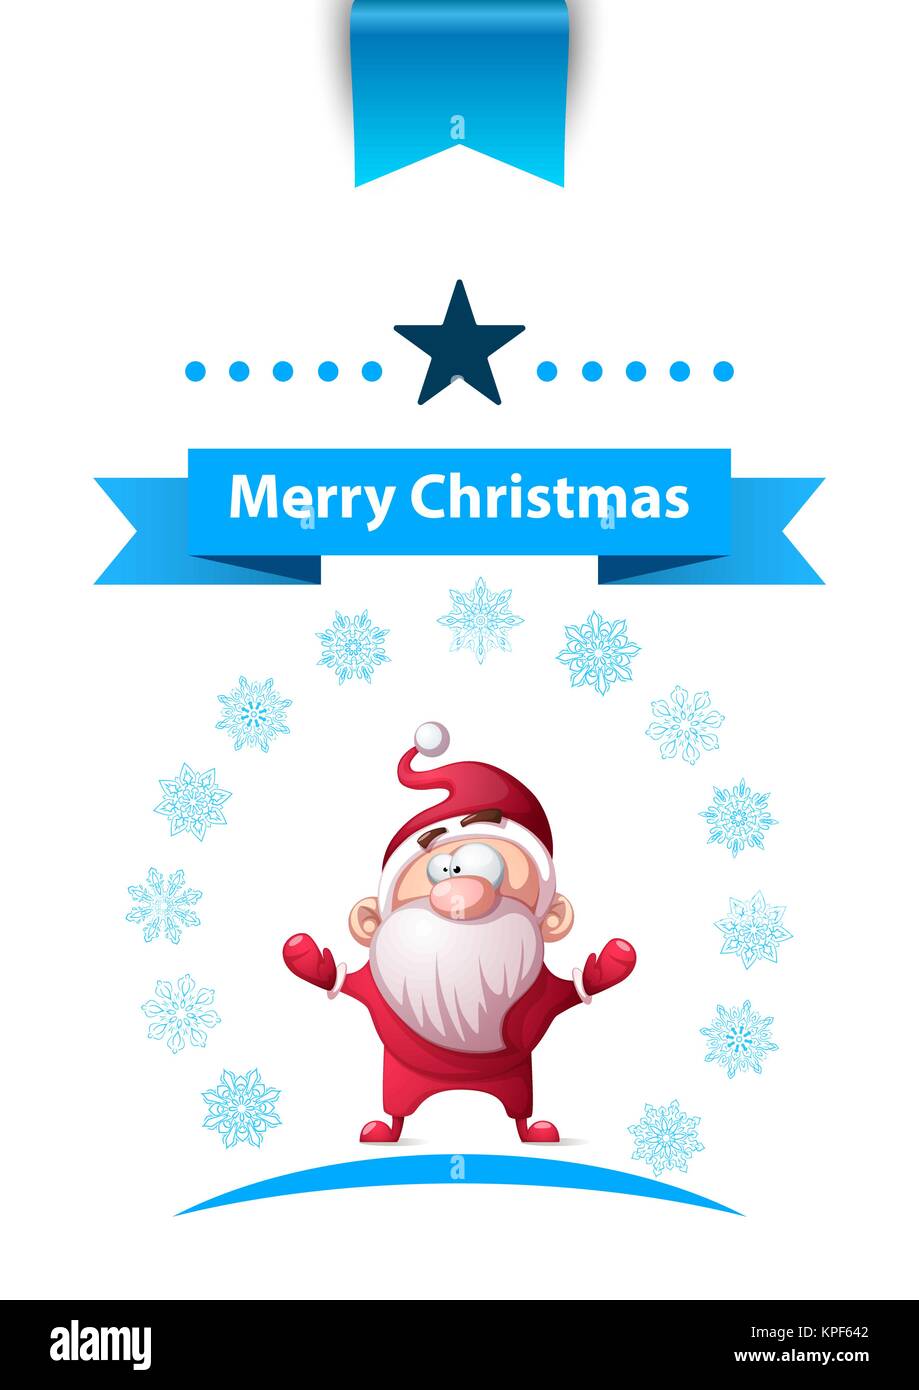 Santa Claus, Father Winter - Merry Christmas template. Stock Vector